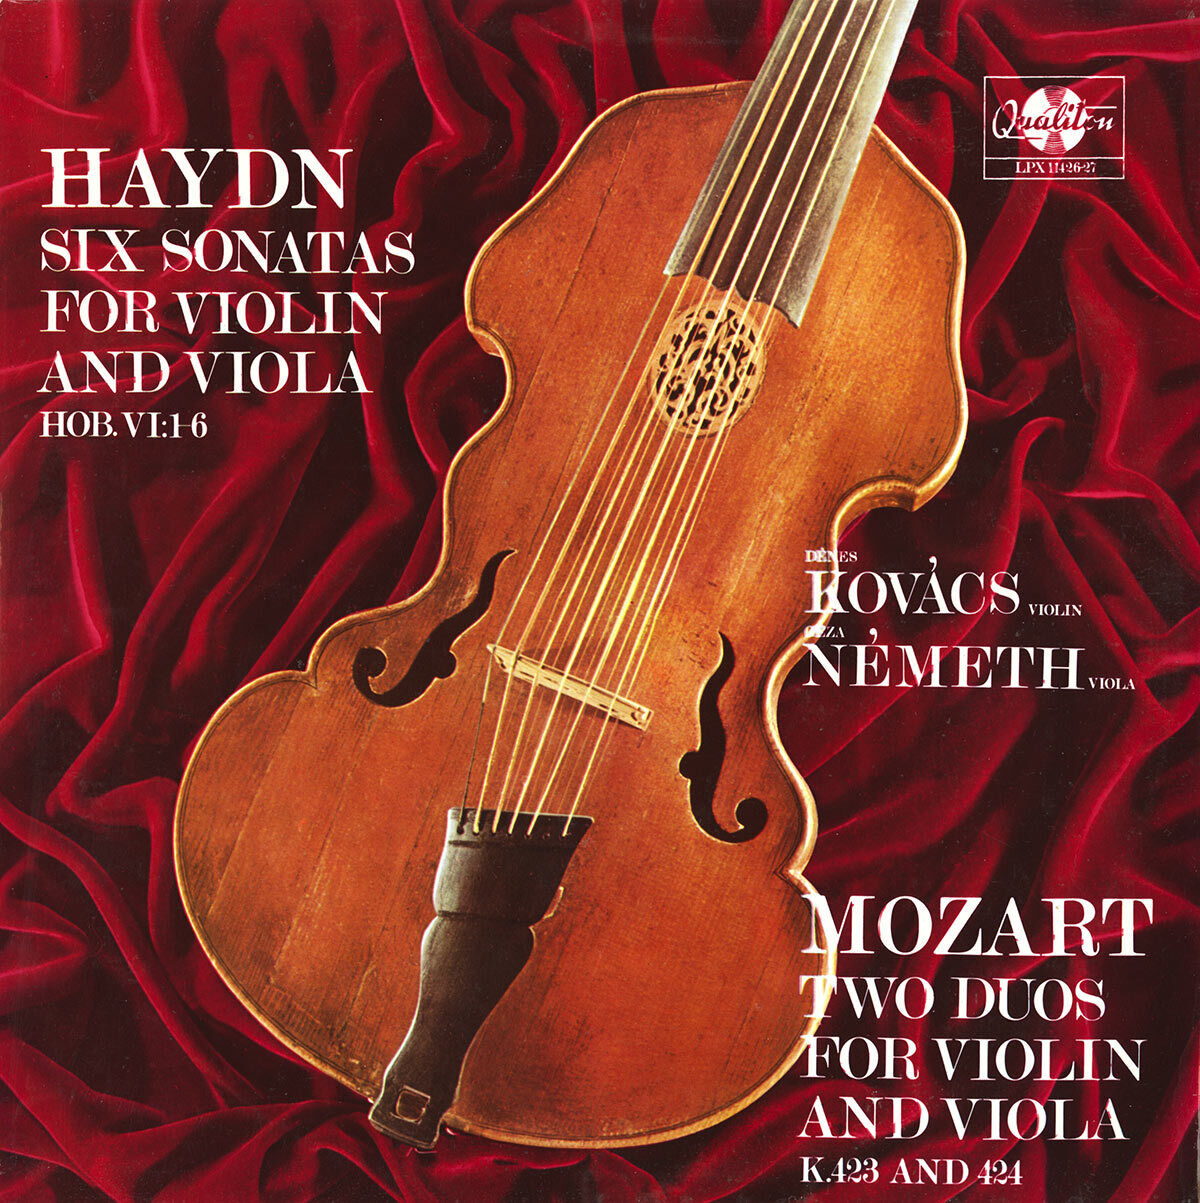 2LP HAYDN Sonatas violin & viola MOZART Duos KOVACS NEMETH Hungaroton SLPX-11426